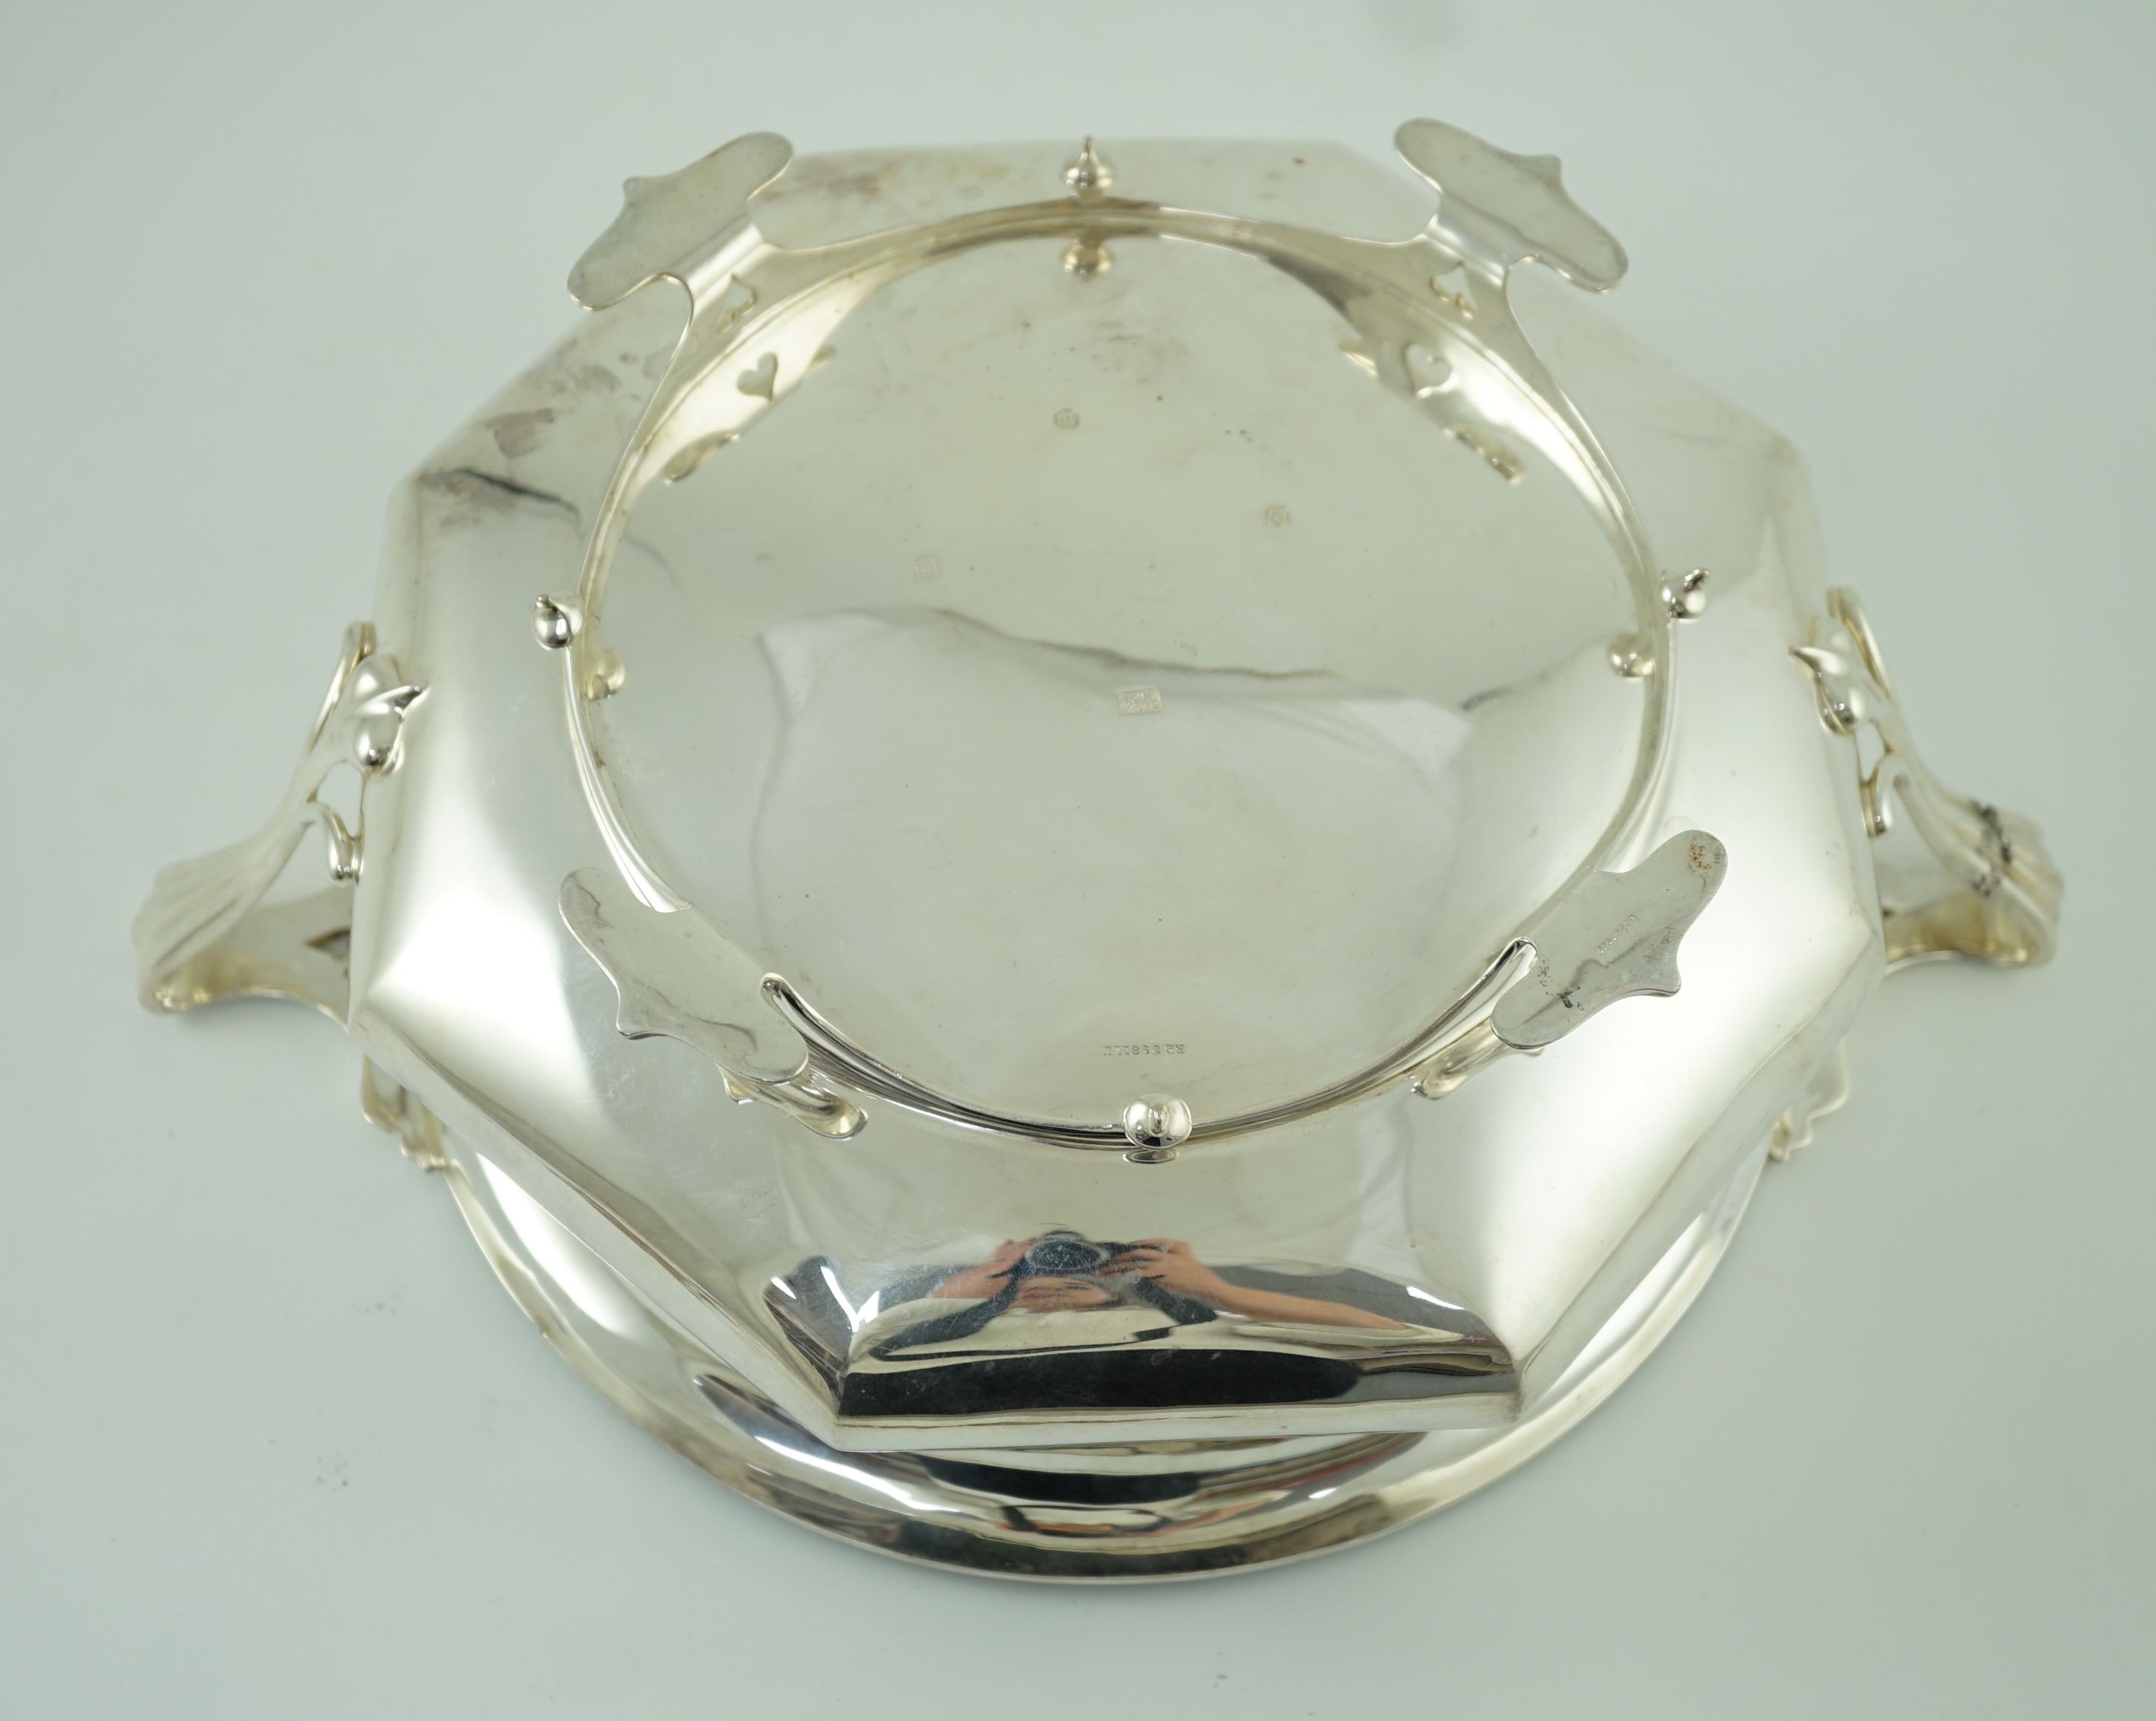 An Edwardian Art Nouveau Scottish silver two handled fruit bowl, by Hamilton & Inches